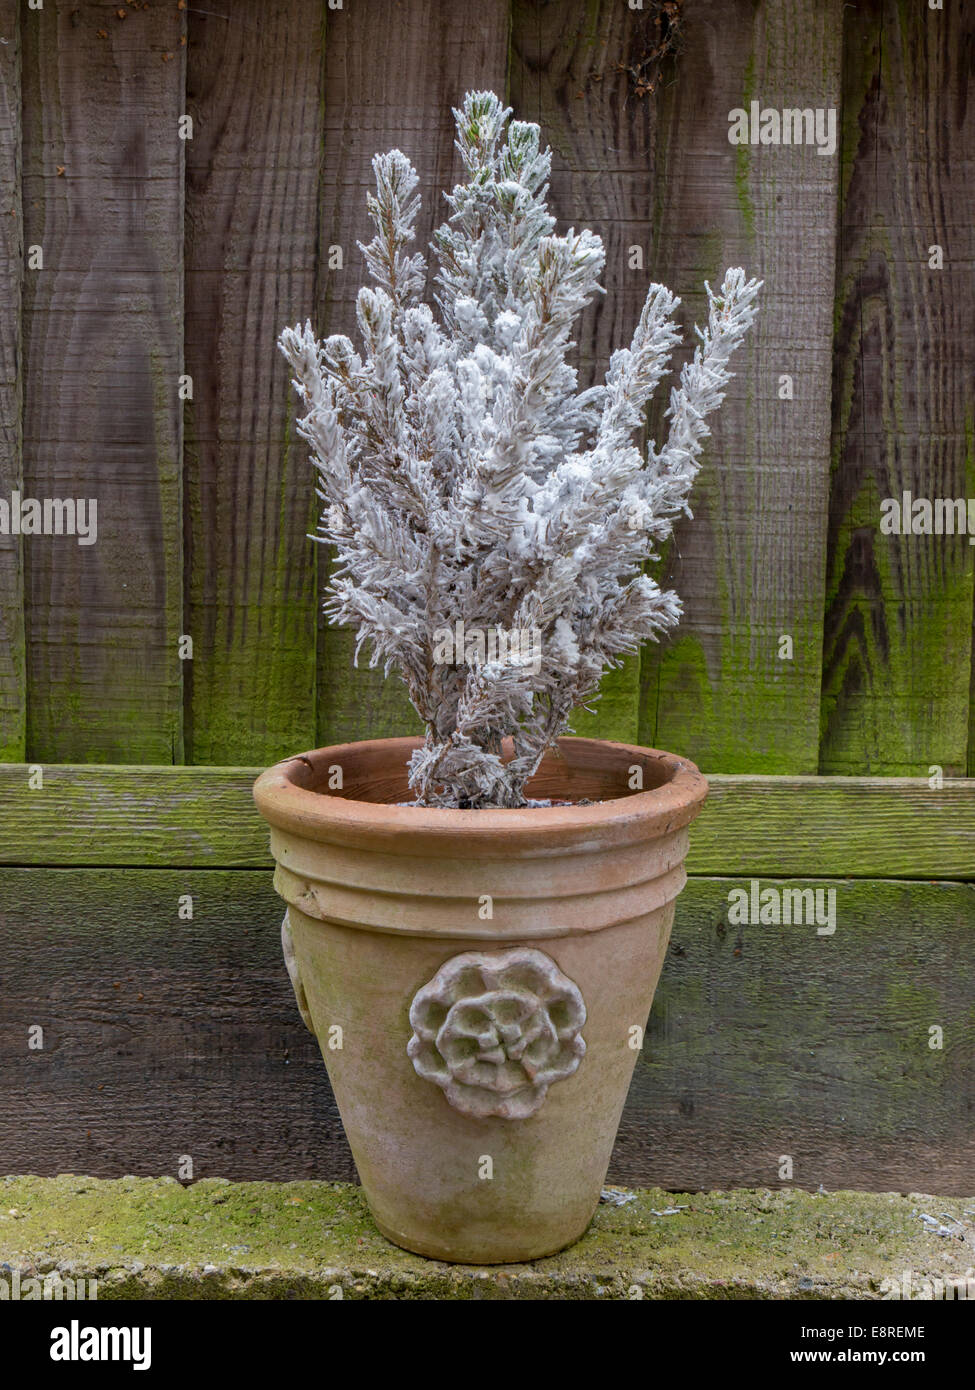 pot plant in silver Stock Photo